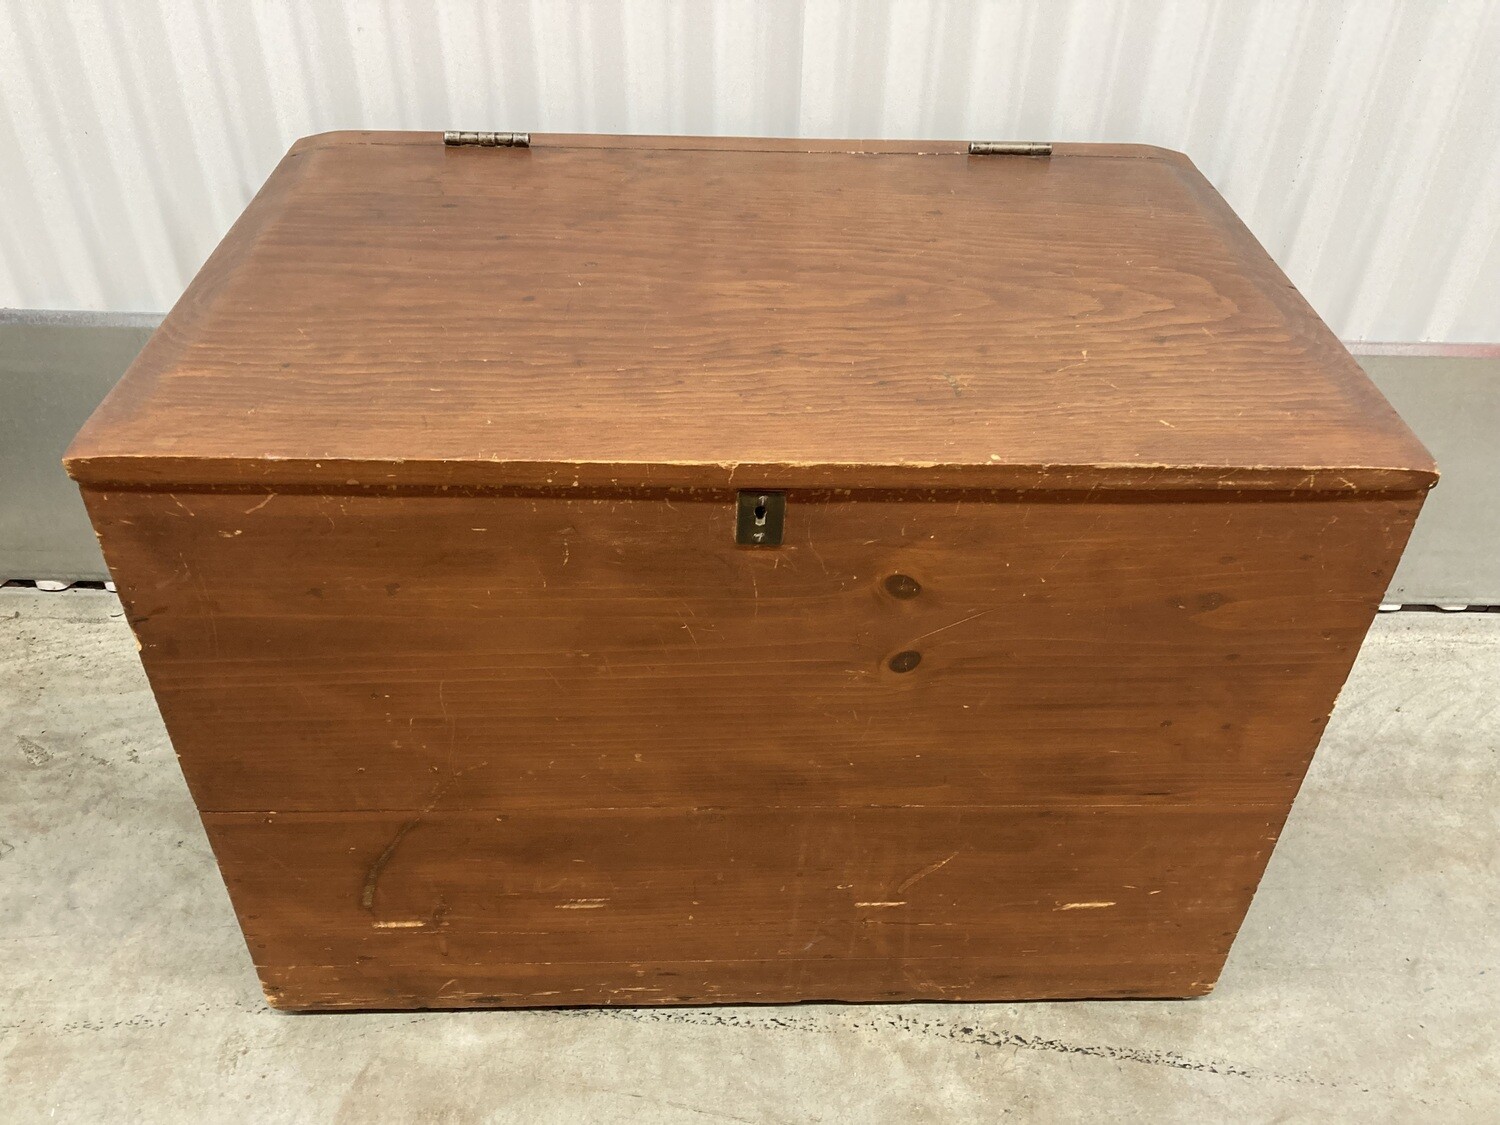 Vintage Wood Storage Box, blue inside #2009